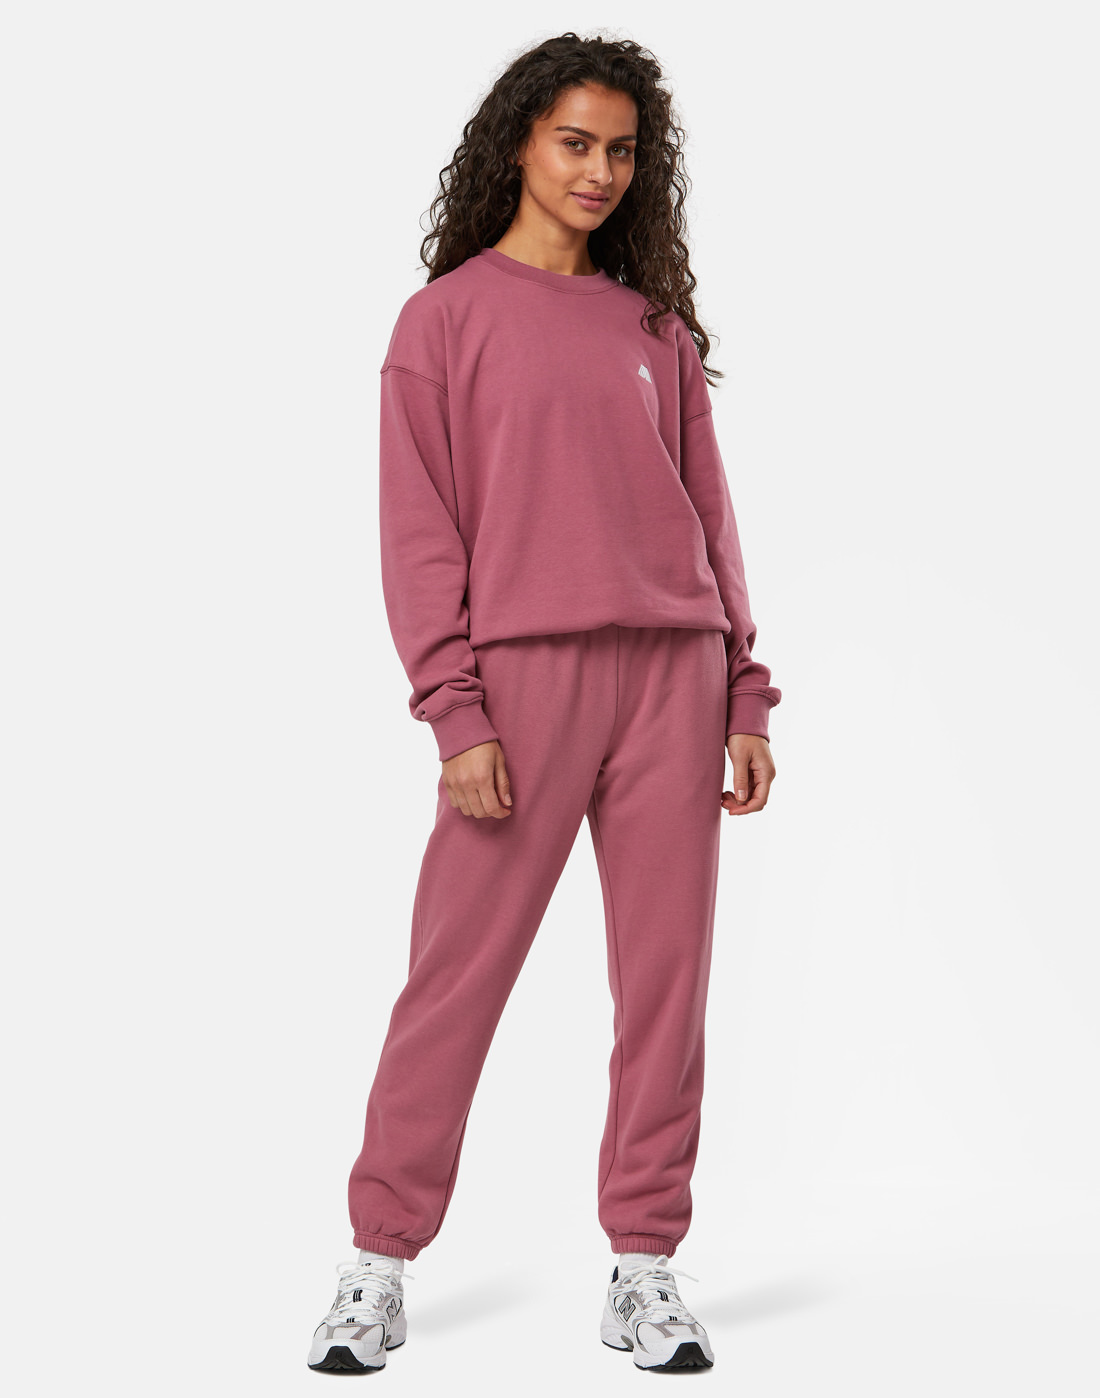 4TH ARQ Womens Marley Sweatshirt - Pink | Life Style Sports IE